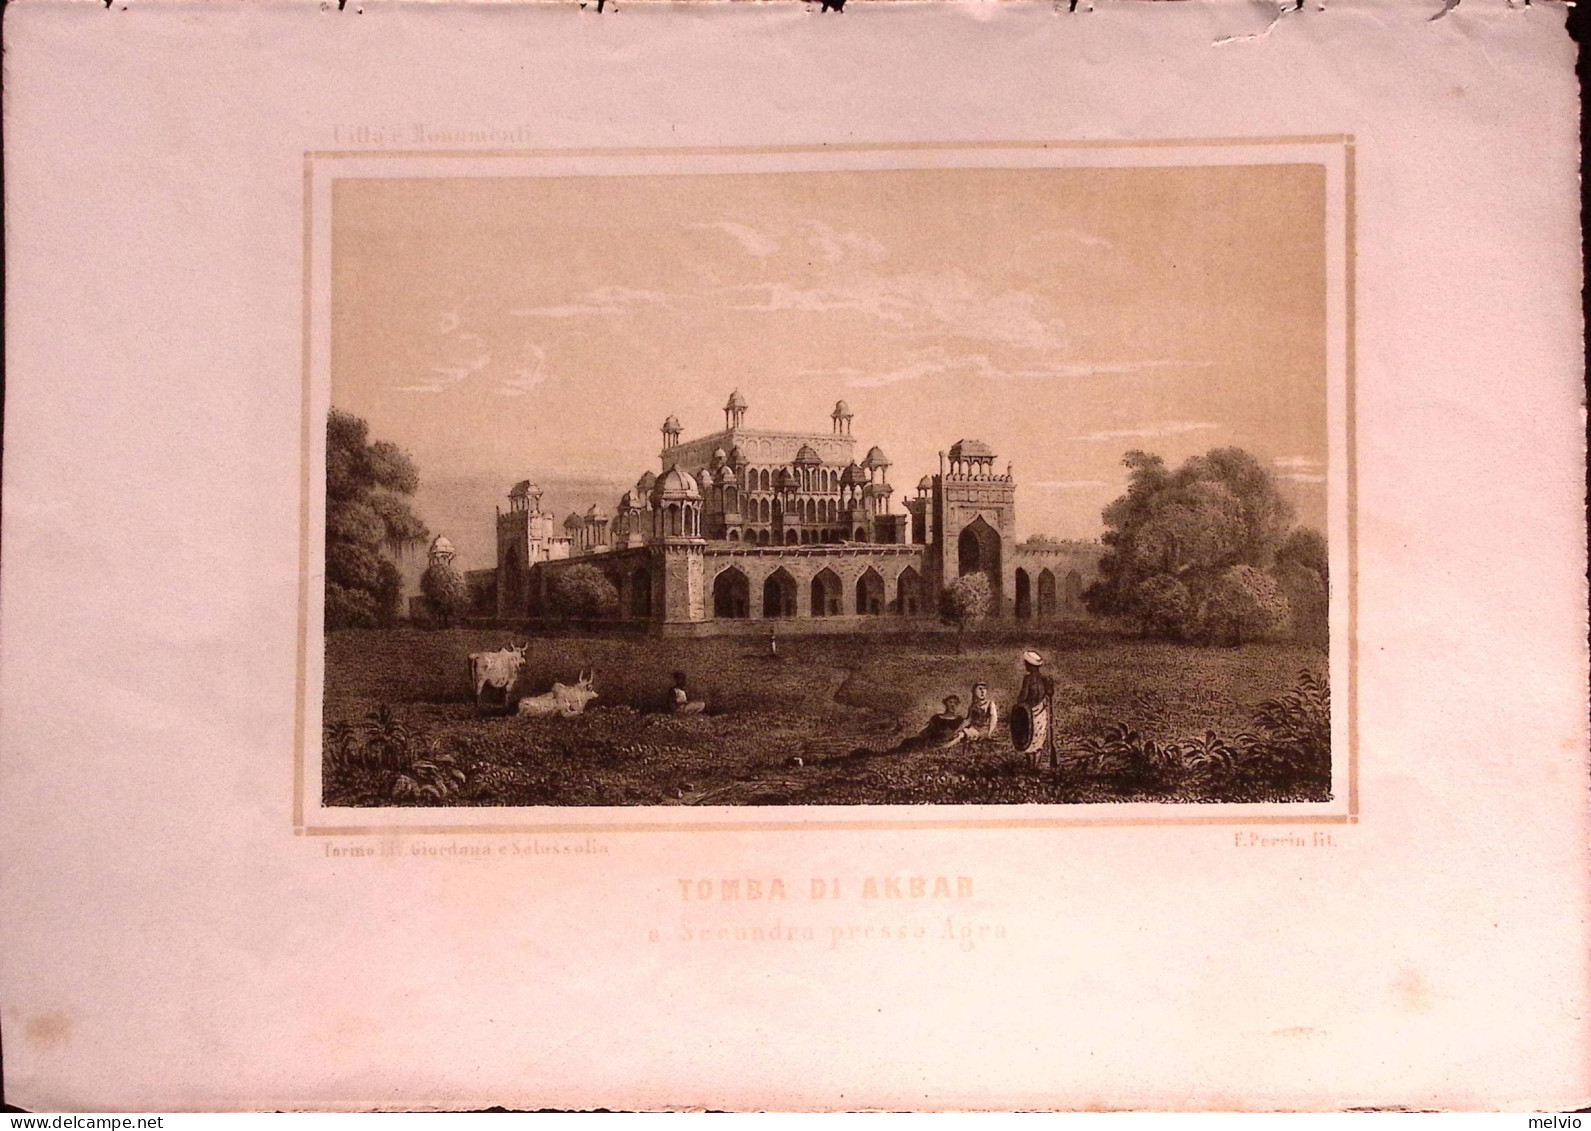 1857-Secundra Presso Agra Tomba Di Akbar Torino Lit.Giordana E Salussolia - Cartes Géographiques